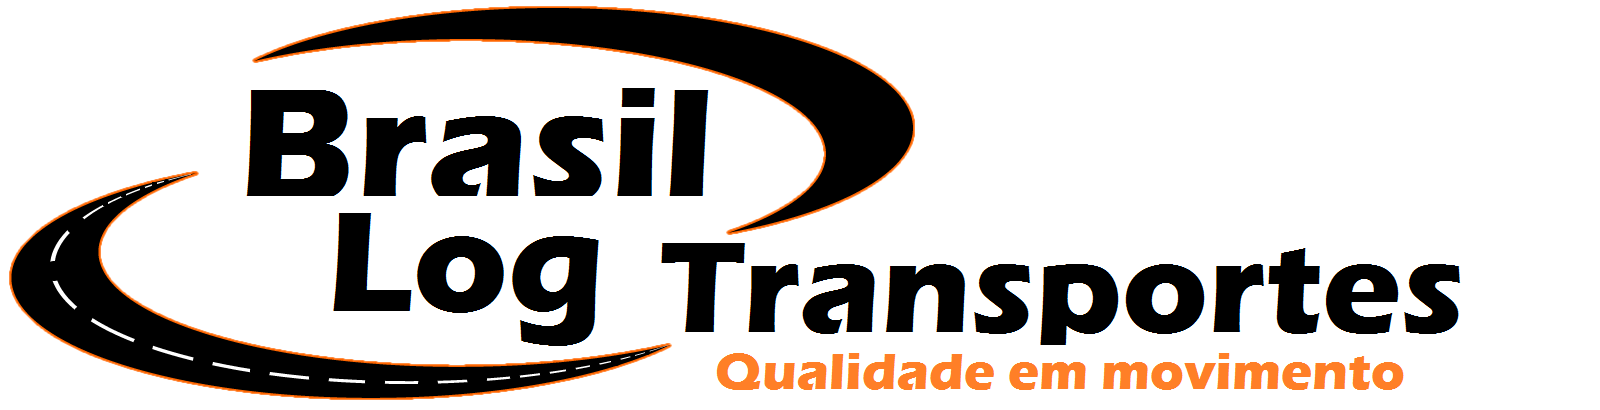 BRASIL LOG TRANSPORTES